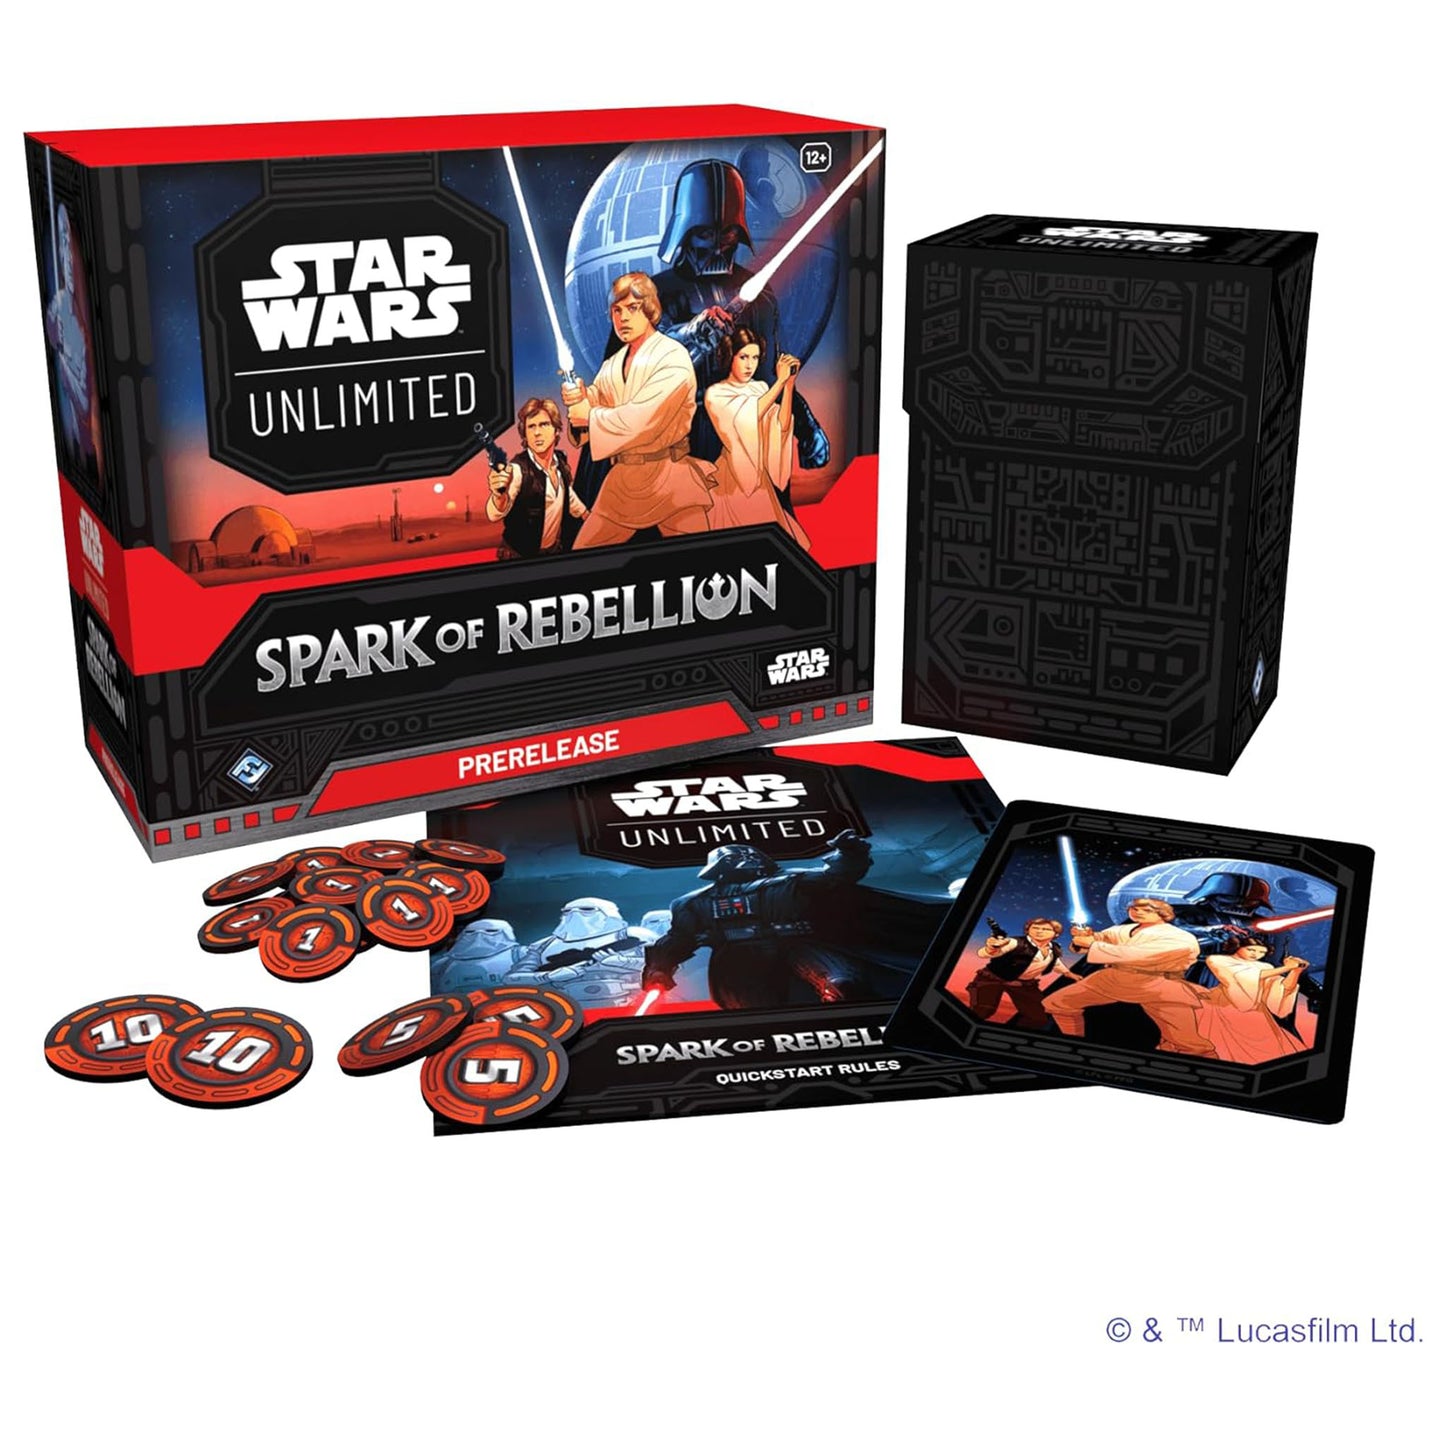 Star Wars : Unlimited Spark of Rebellion Prerelease Box